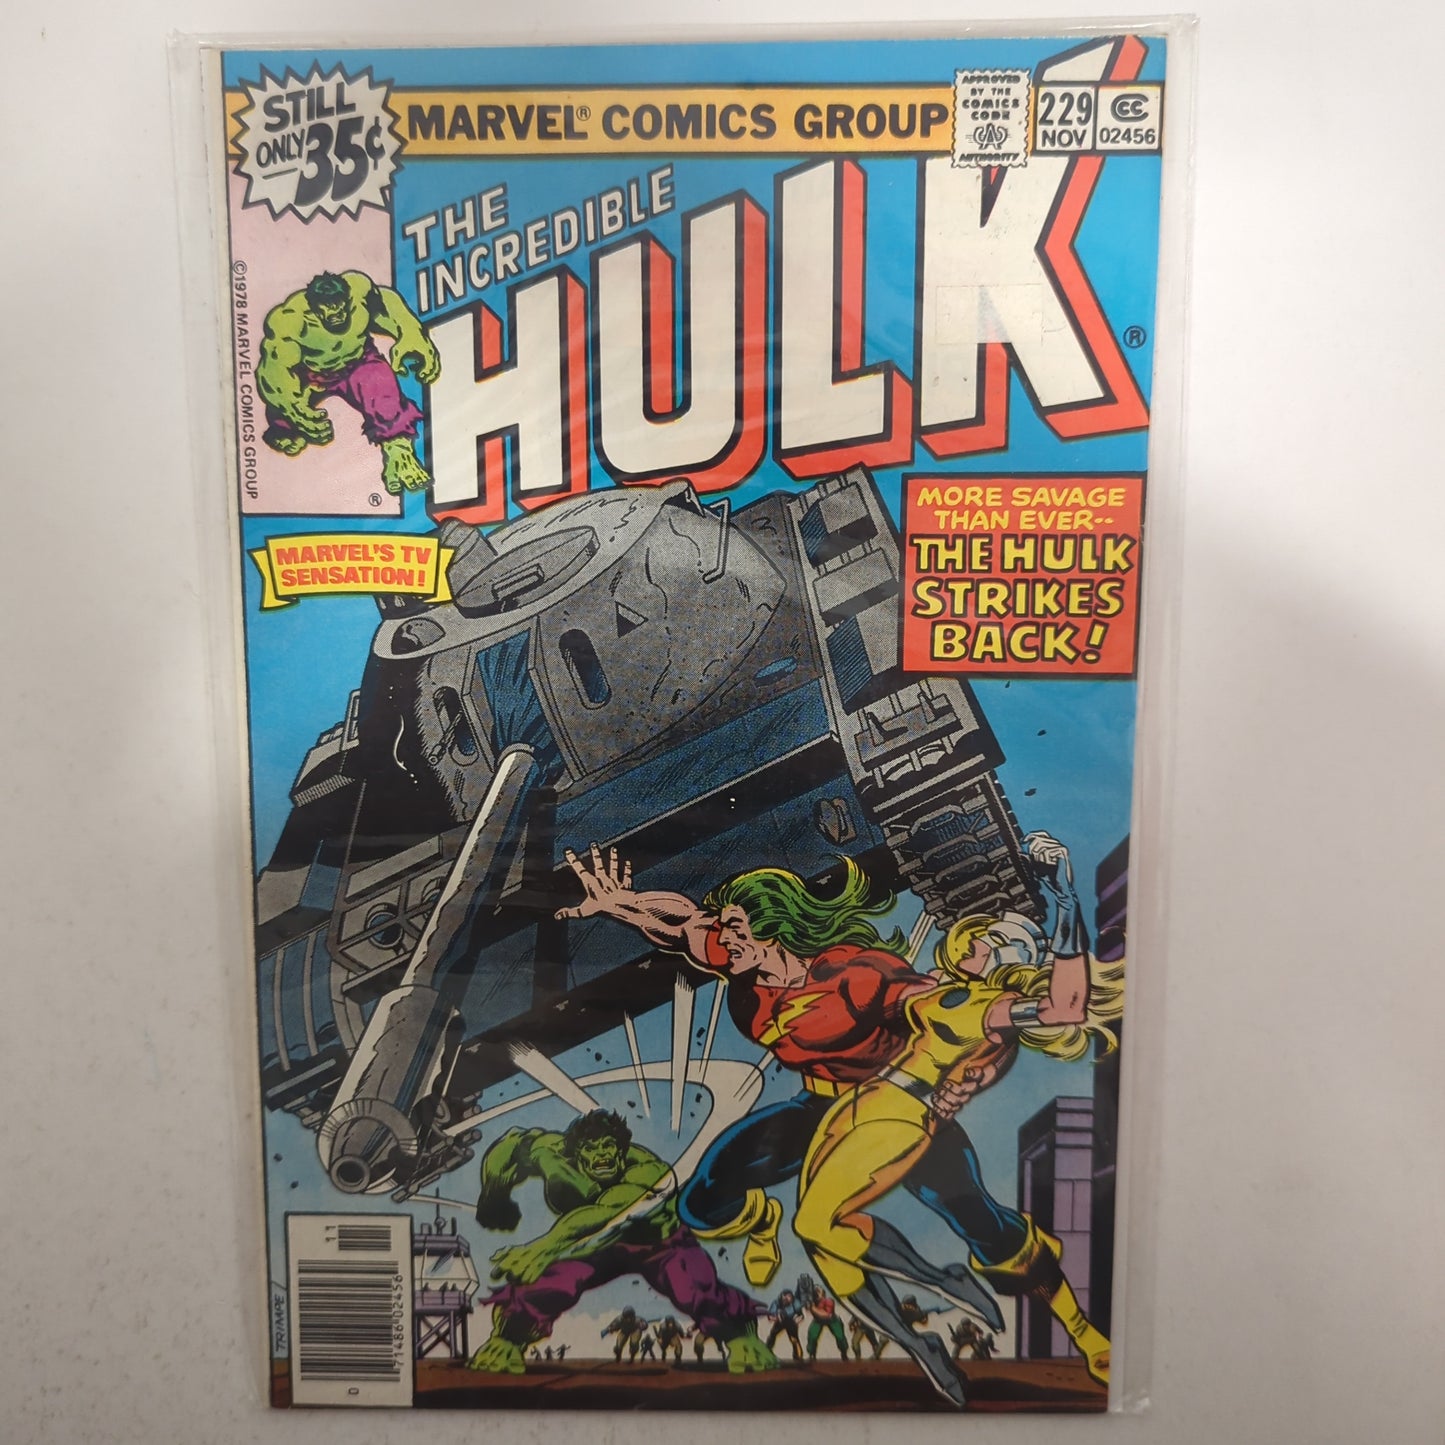 The Incredible Hulk #229 Newsstand